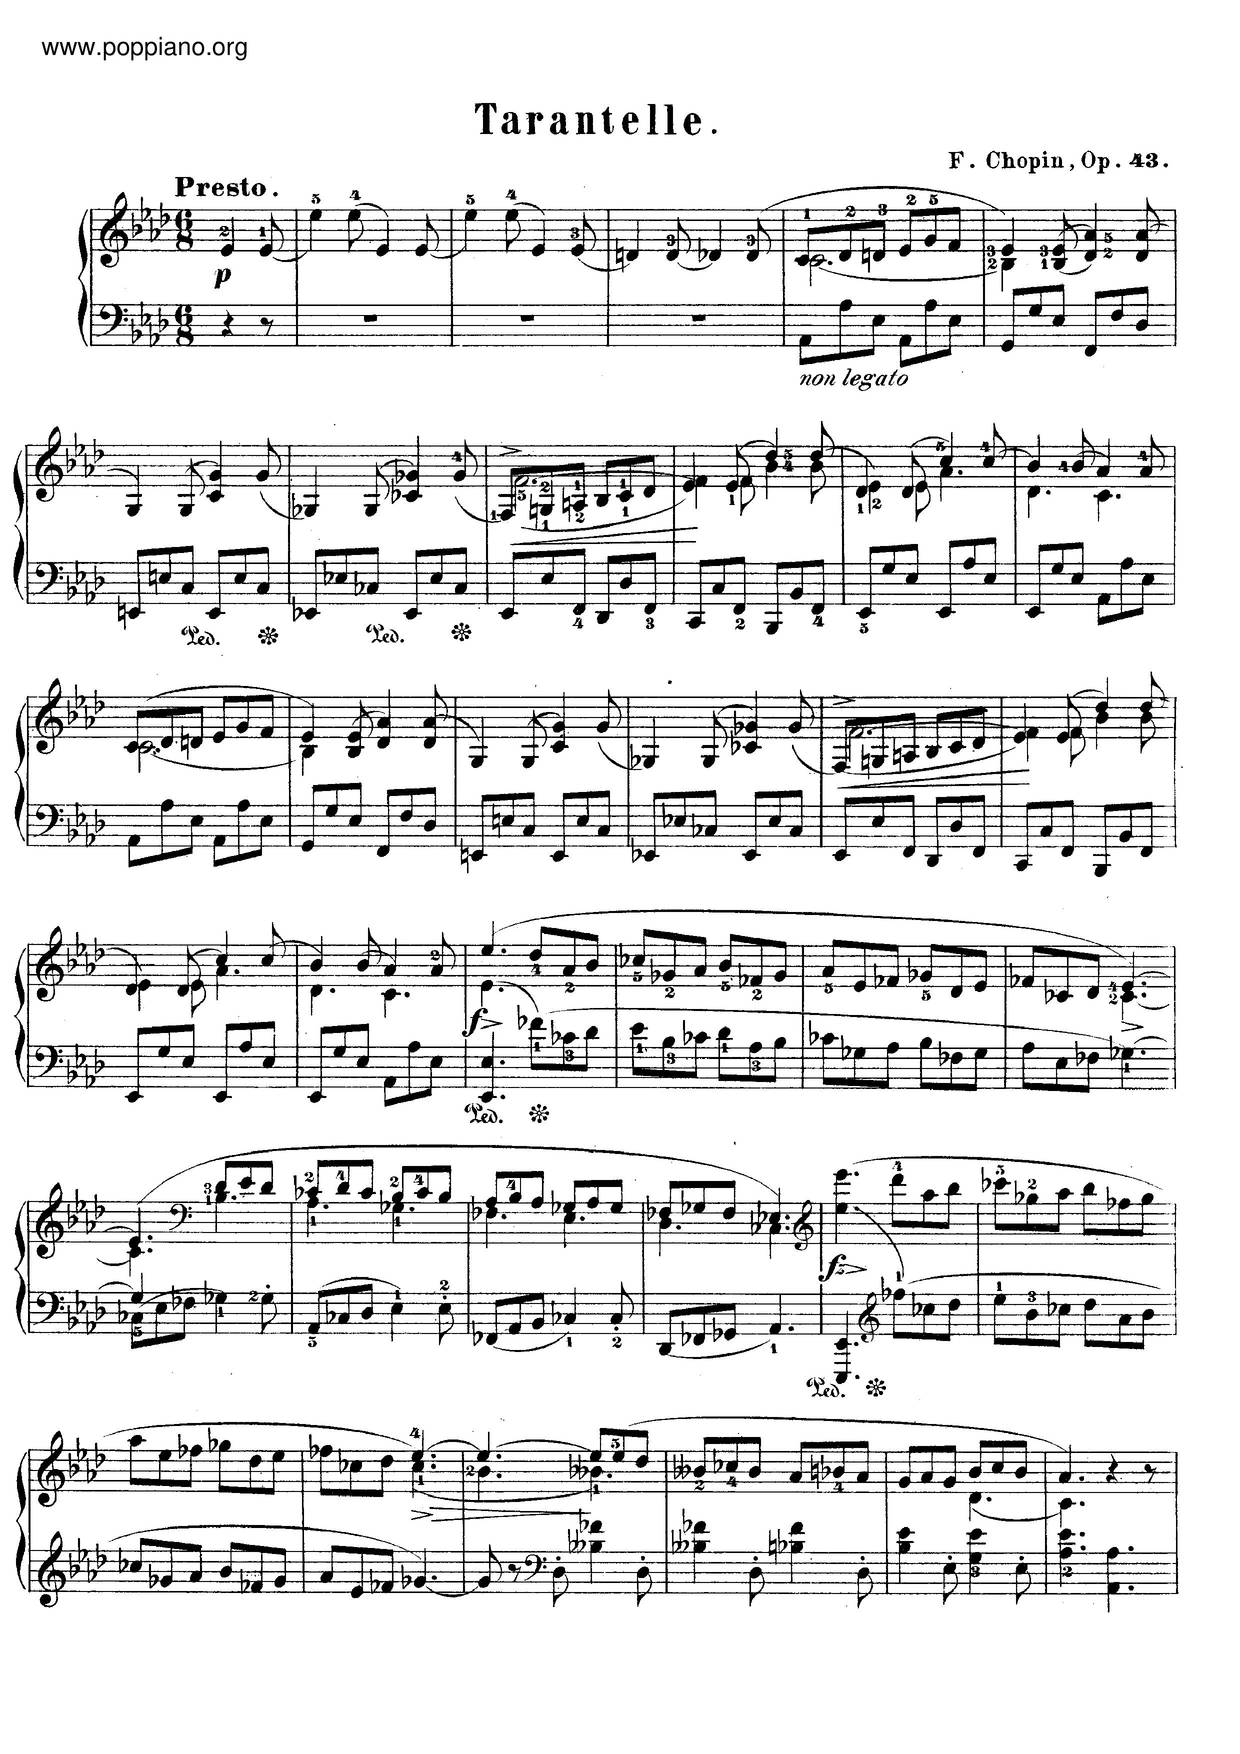 Tarantella, Op. 43 Score